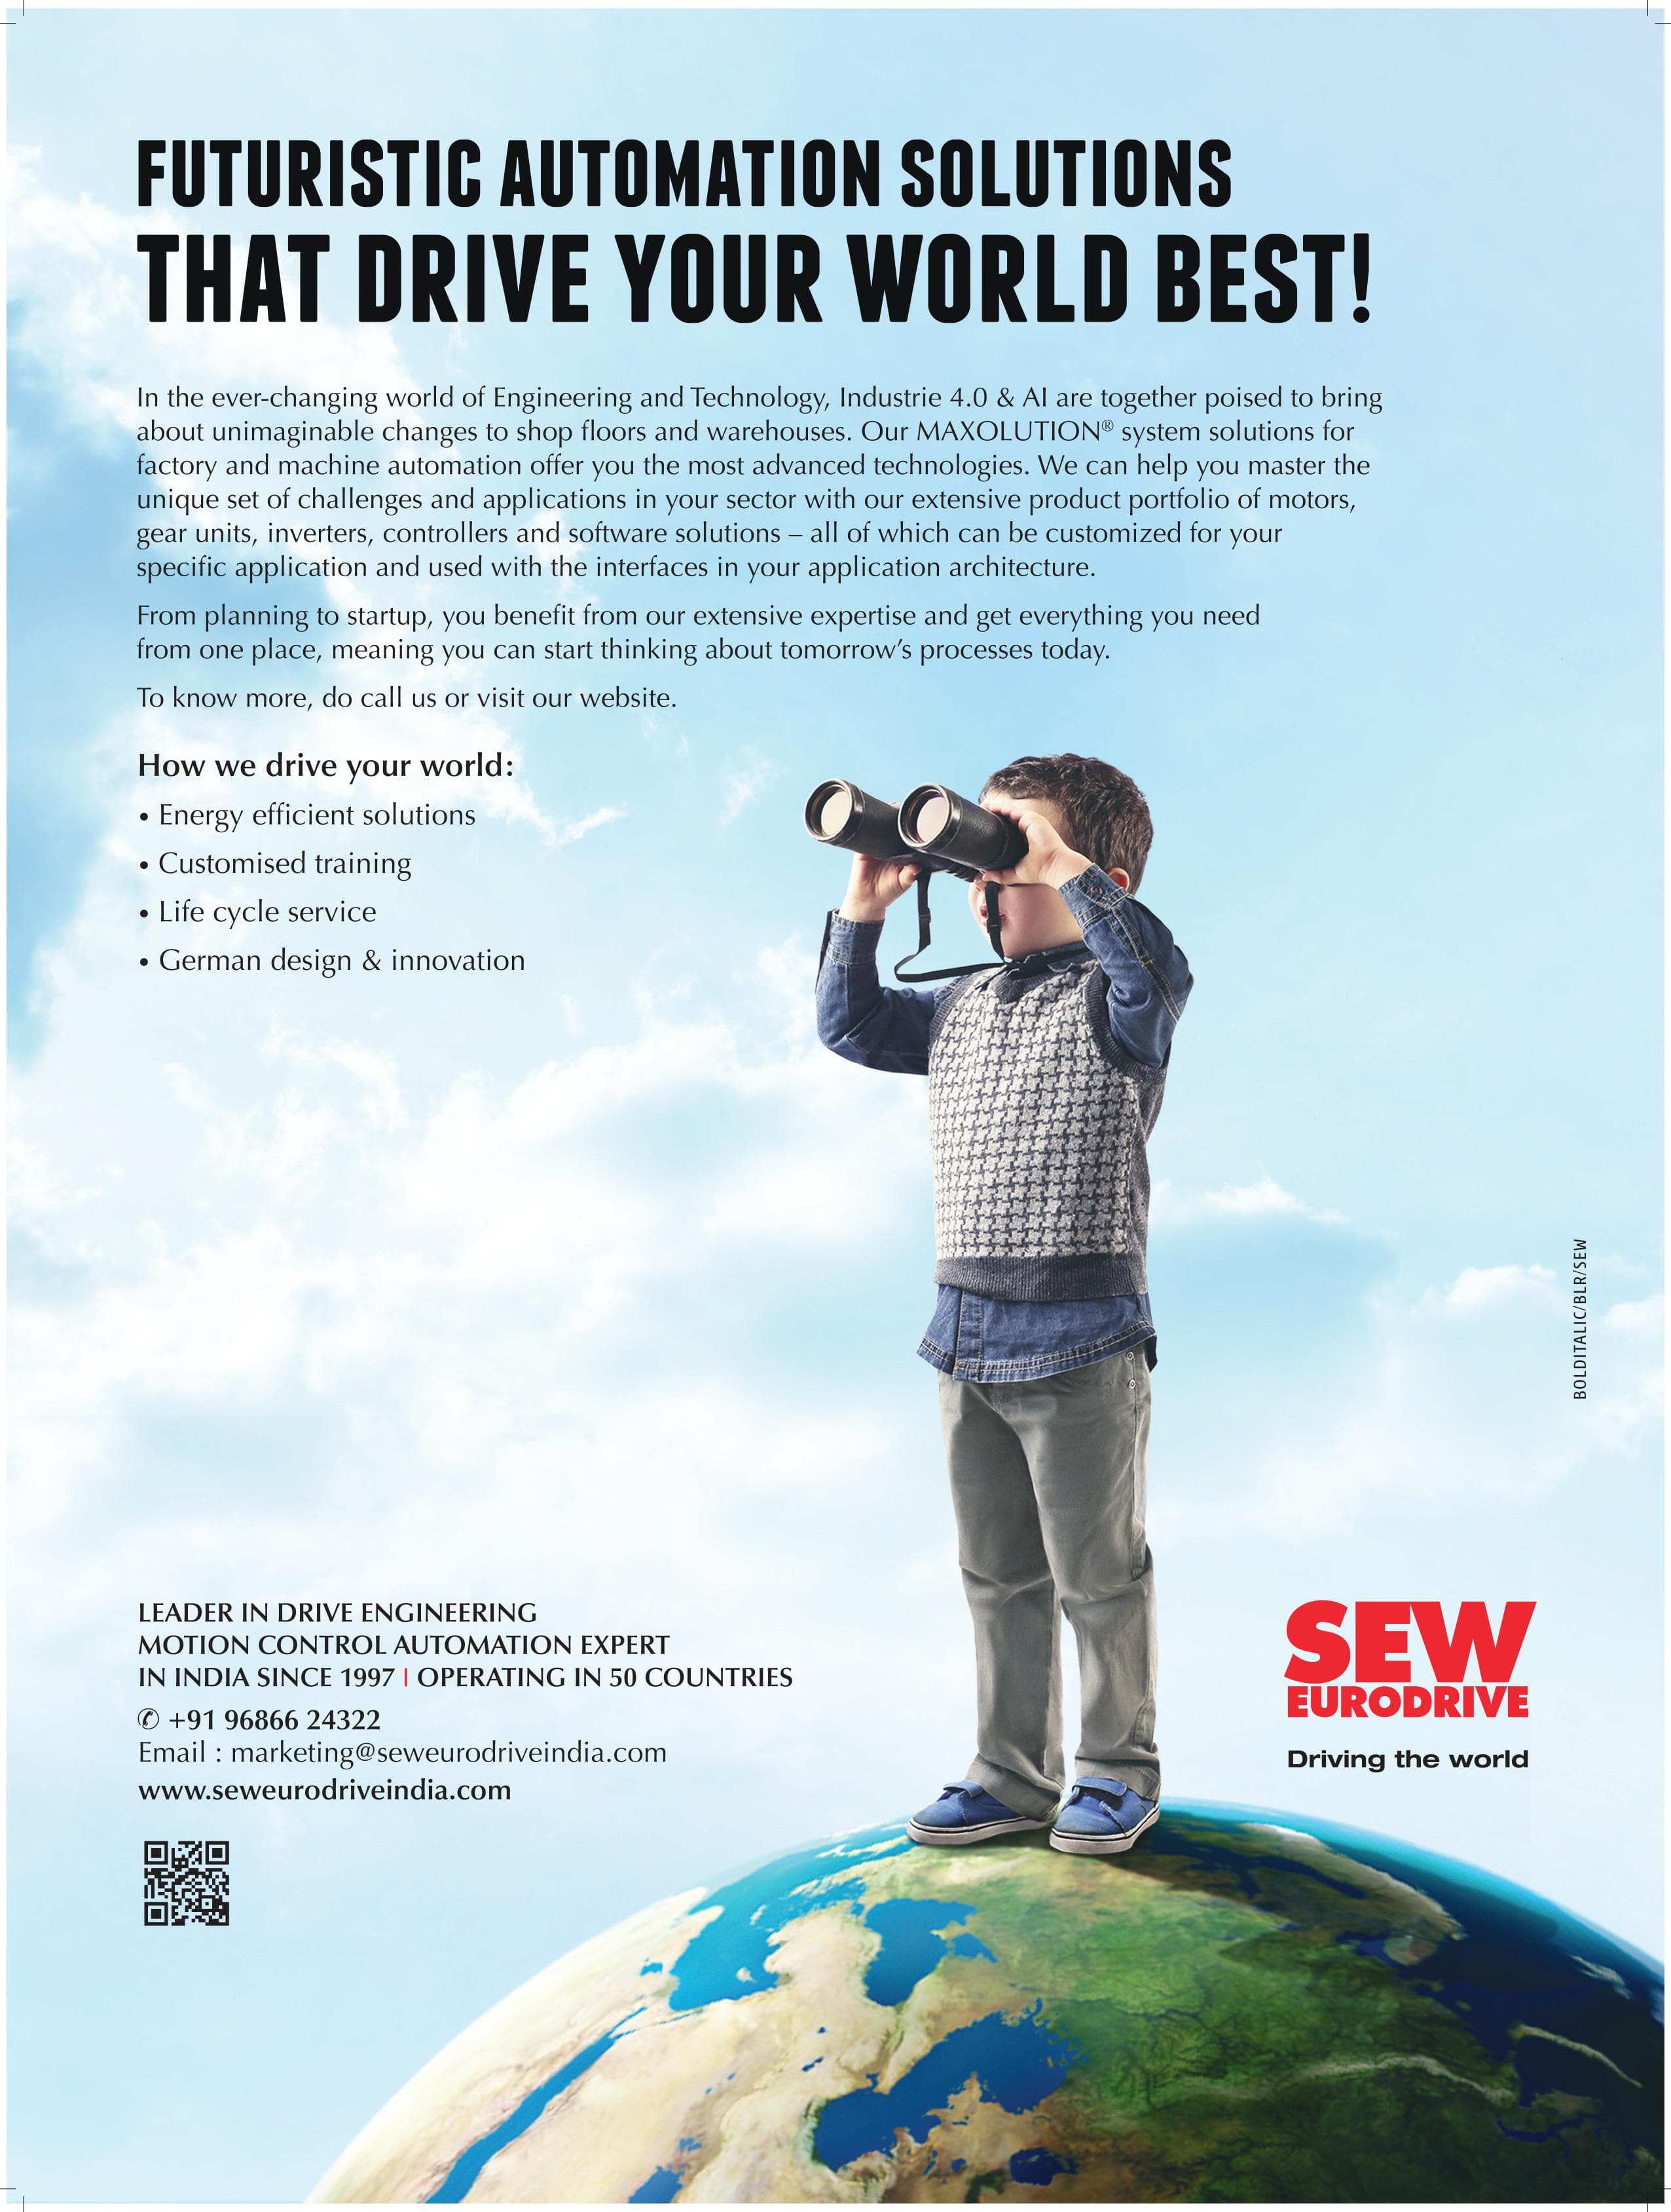 Sew Eurodrive | Driving The World